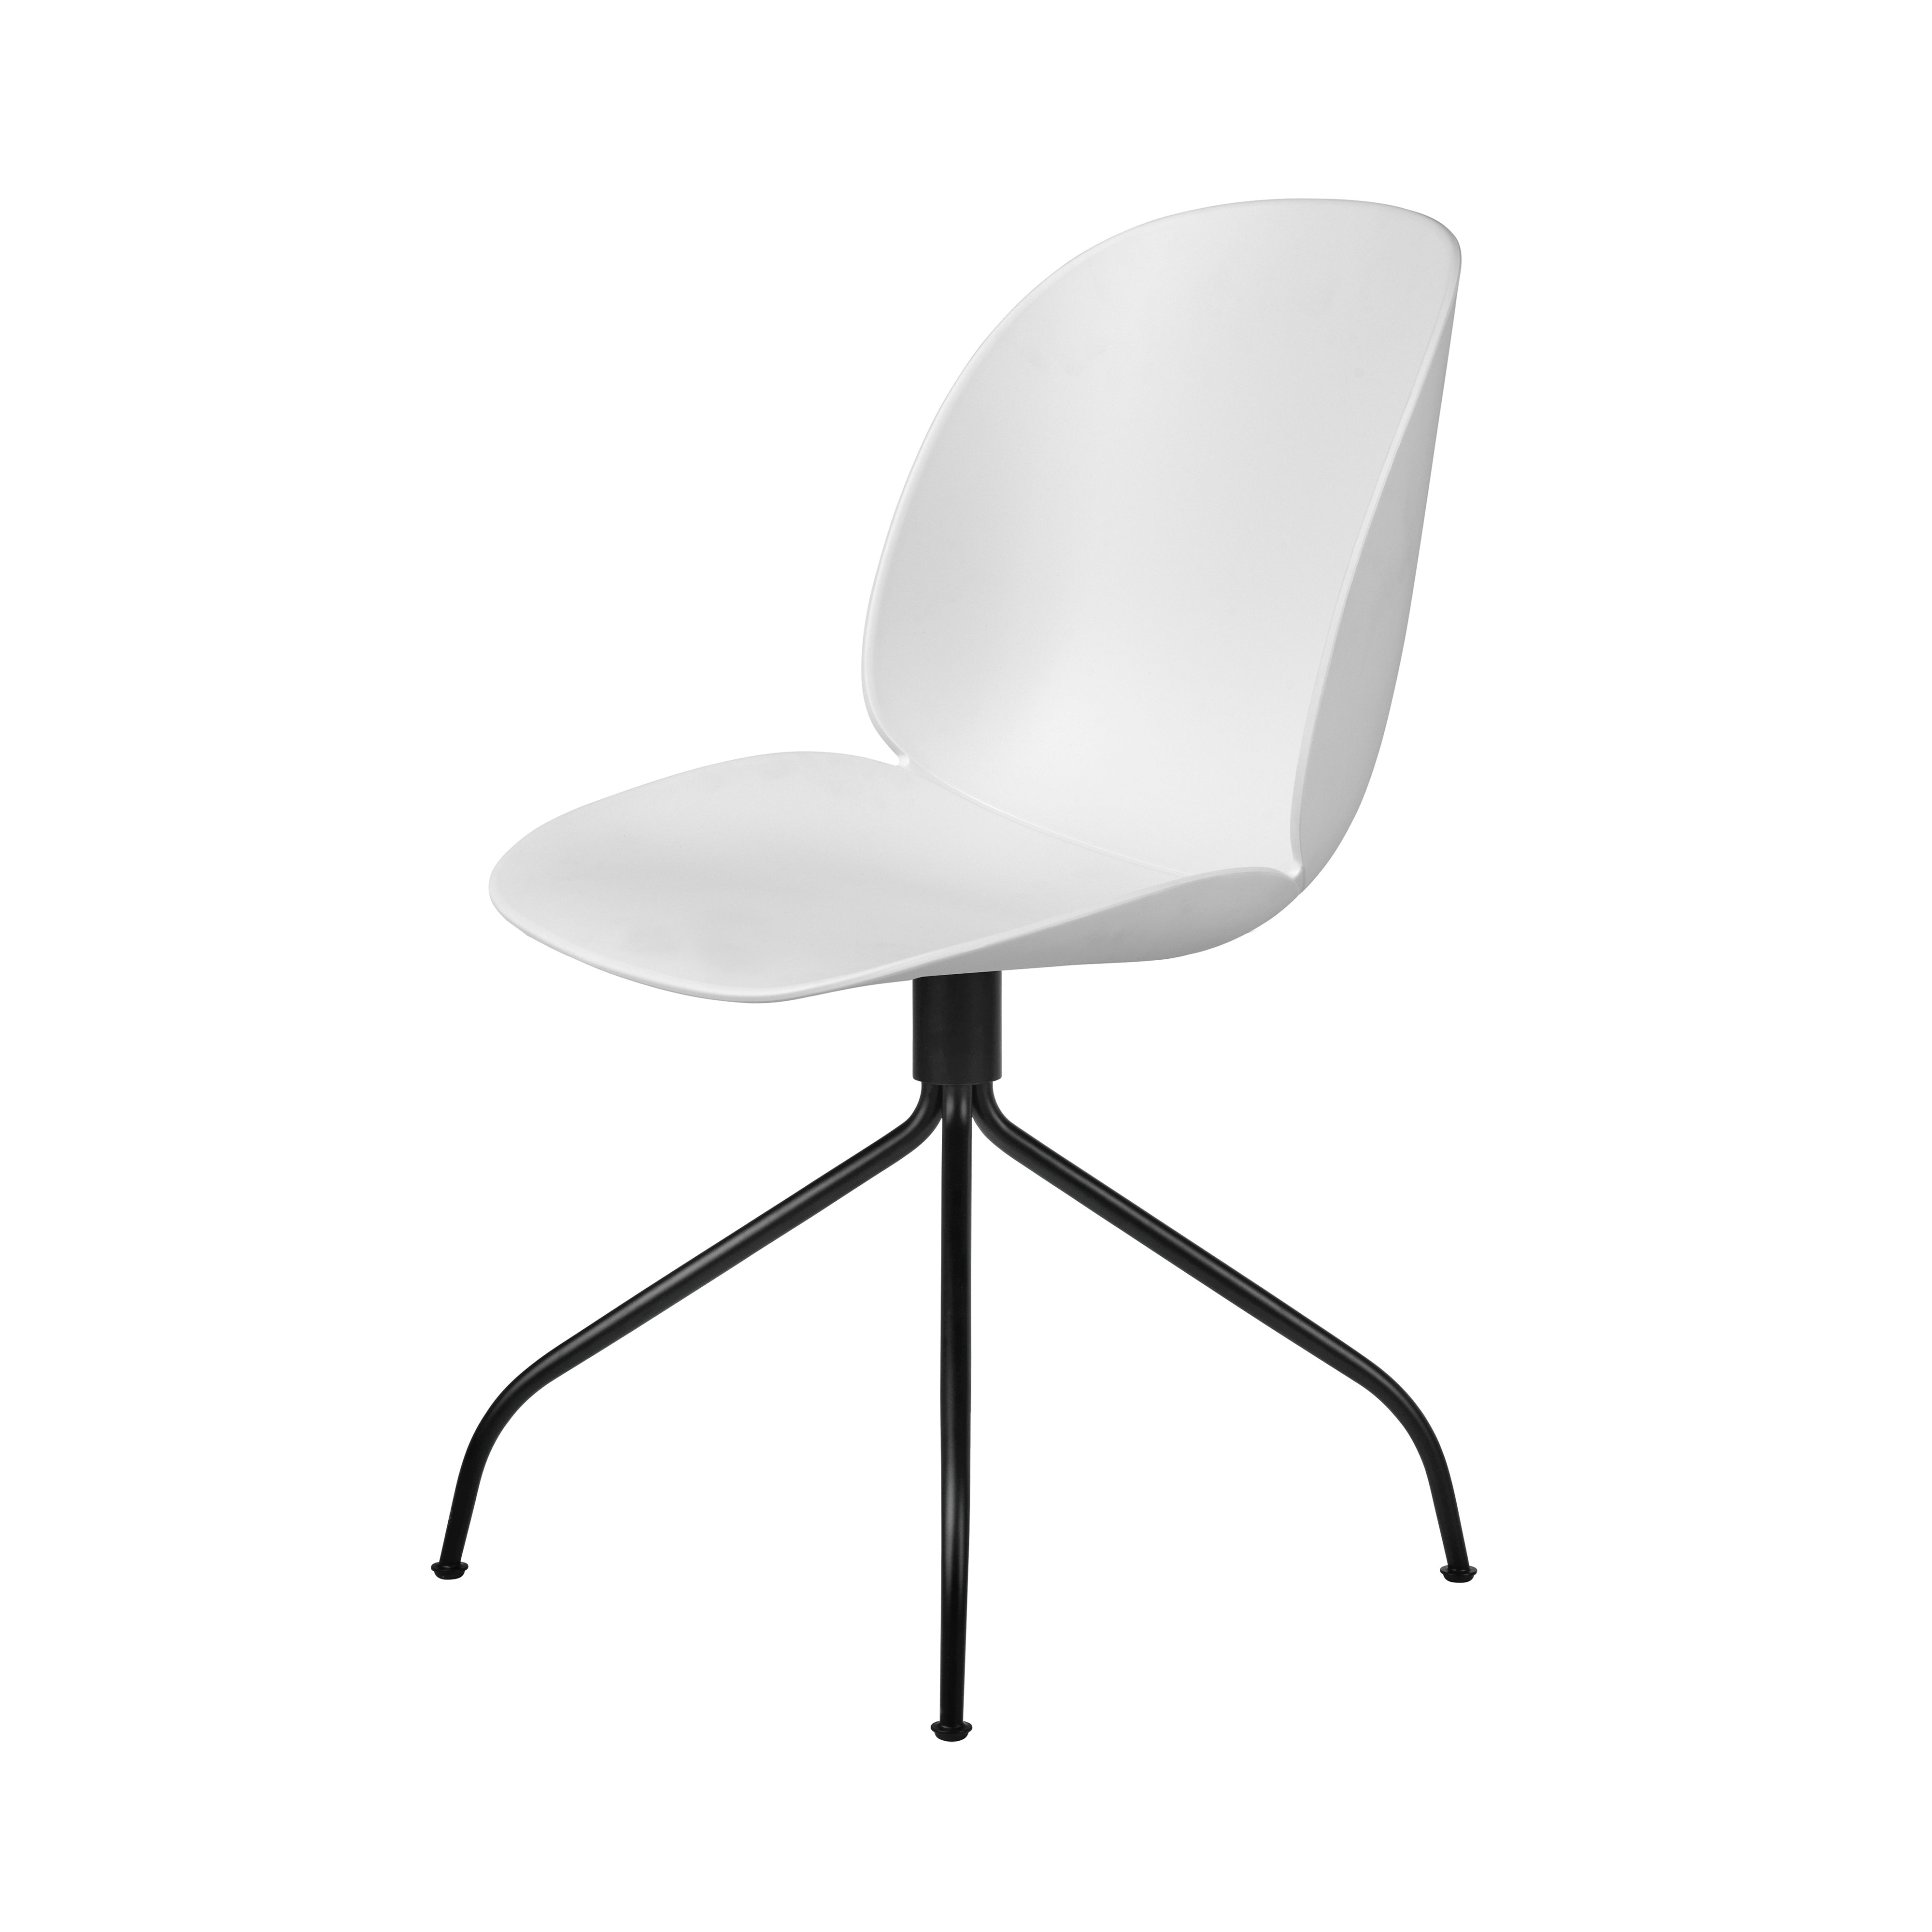 Beetle Meeting Chair: Swivel Base + Alabaster White + Black Matt + Felt Glides